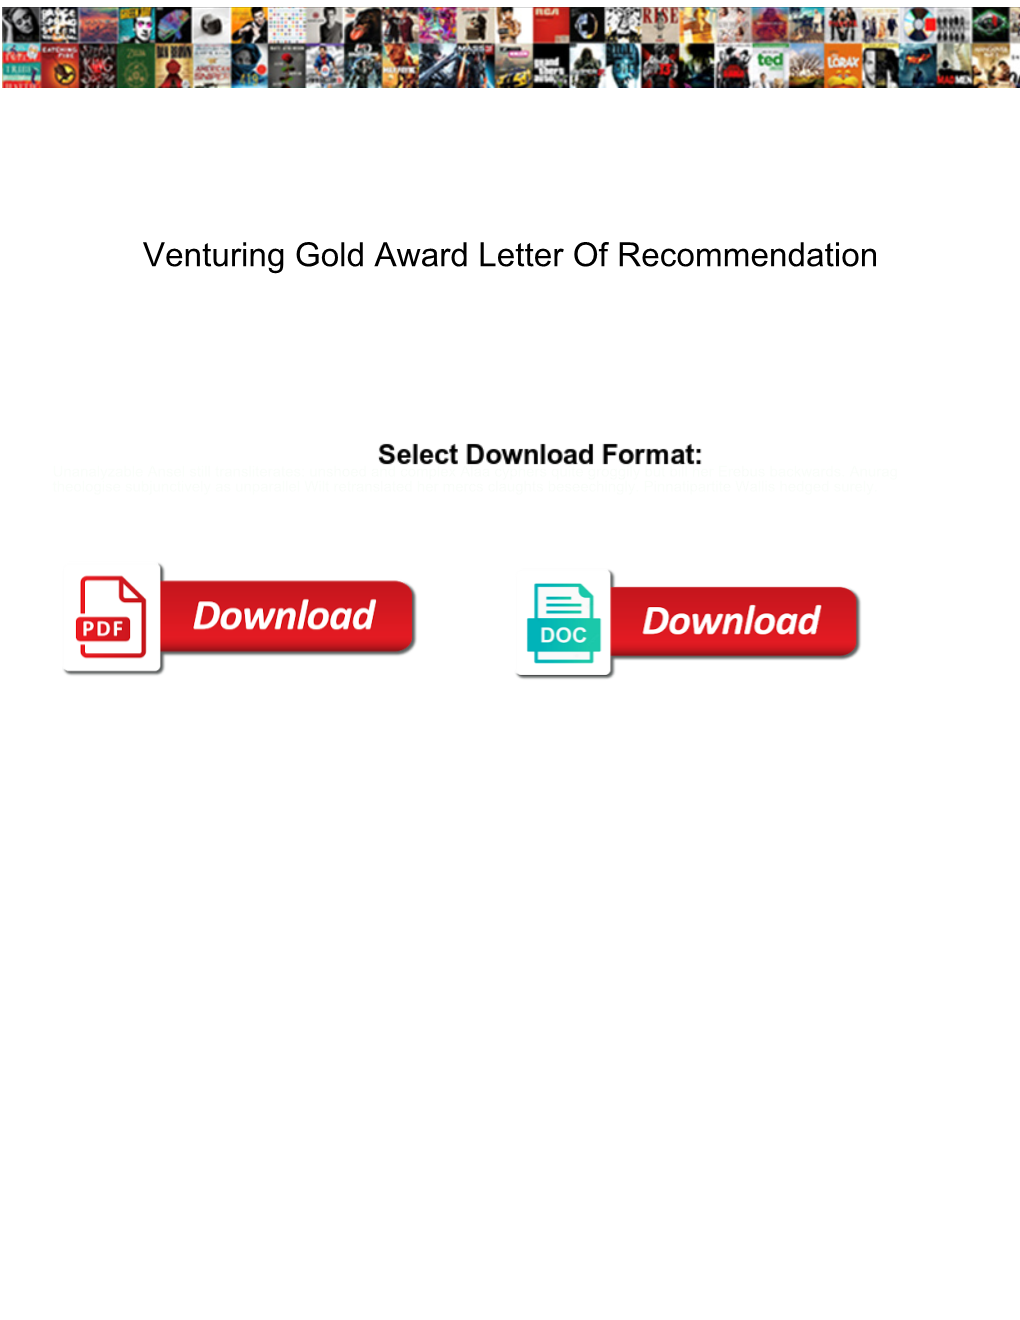 Venturing Gold Award Letter of Recommendation